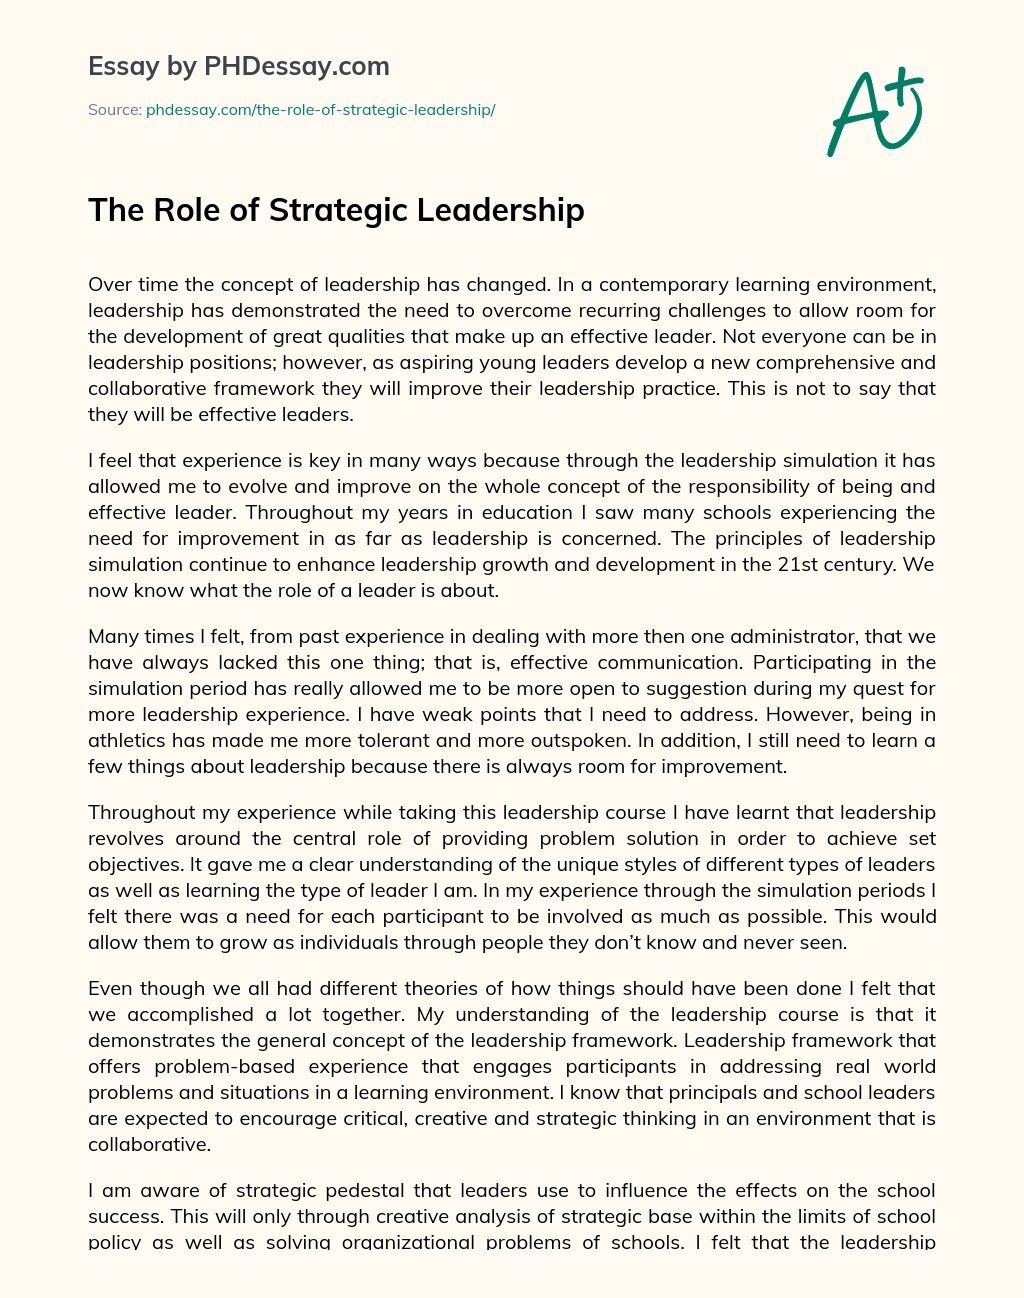 The Role of Strategic Leadership essay